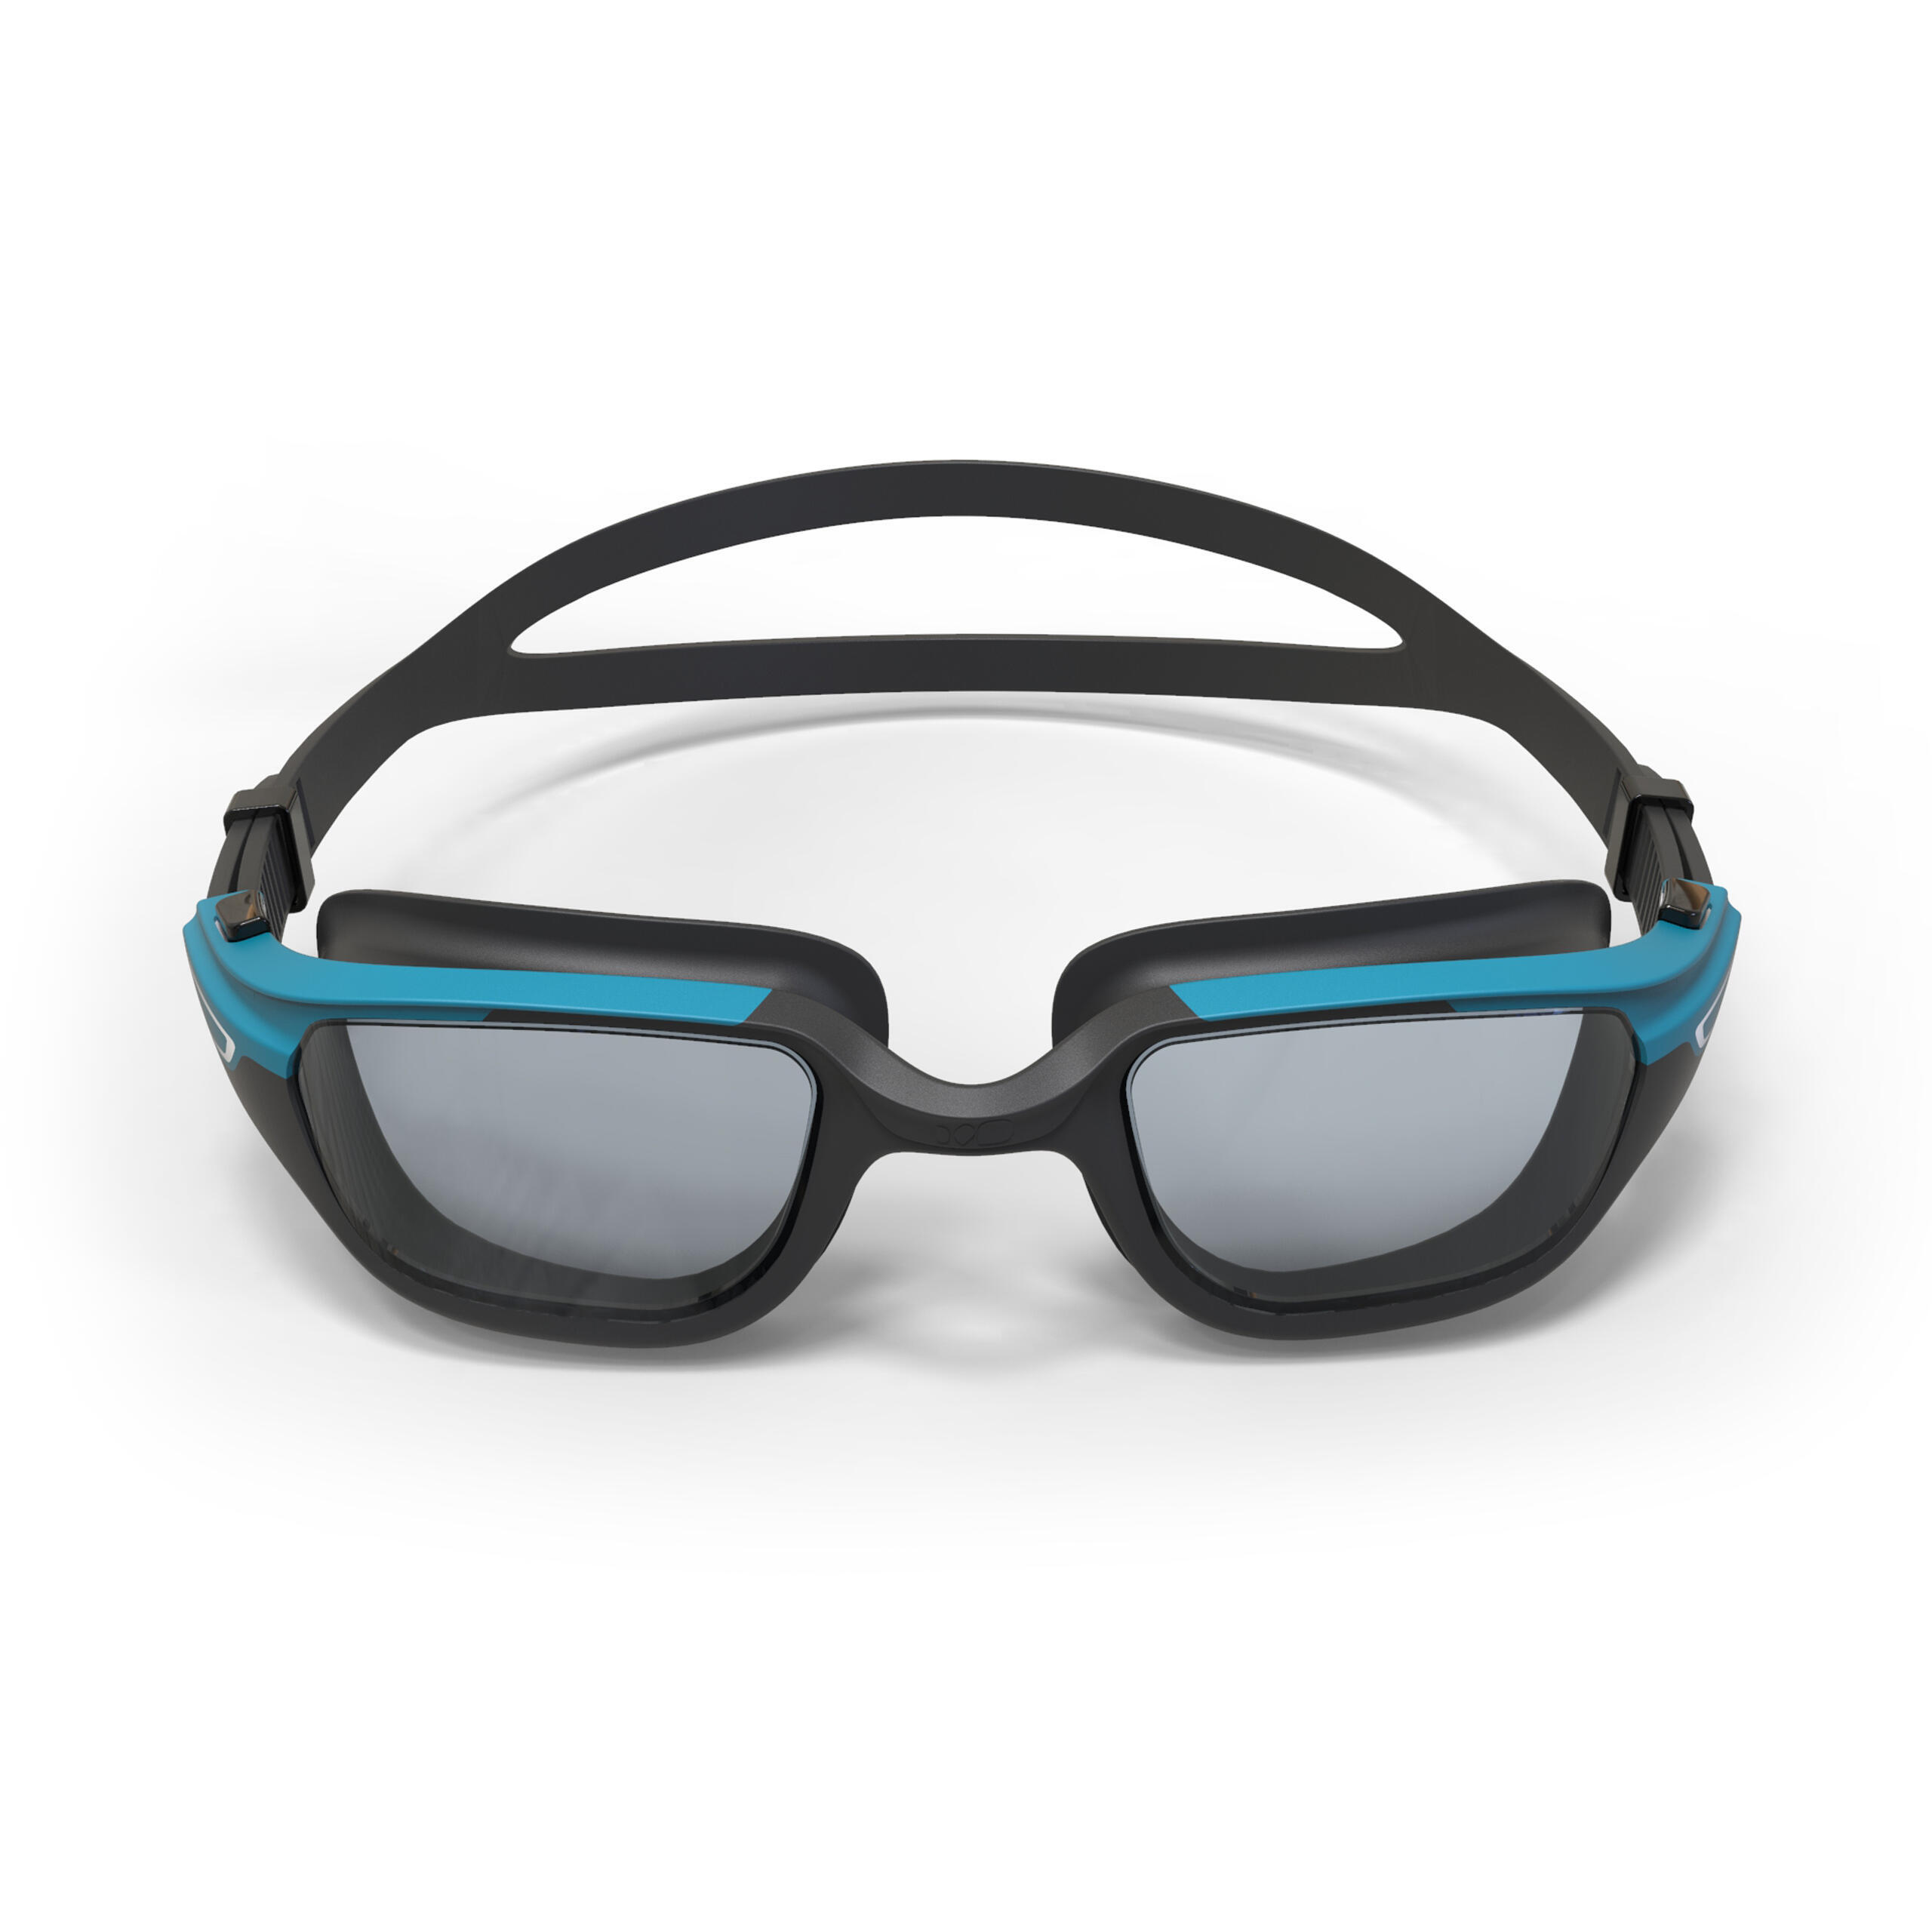 SPIRIT swimming goggles - Polarised lenses - Large size - Black blue 3/5